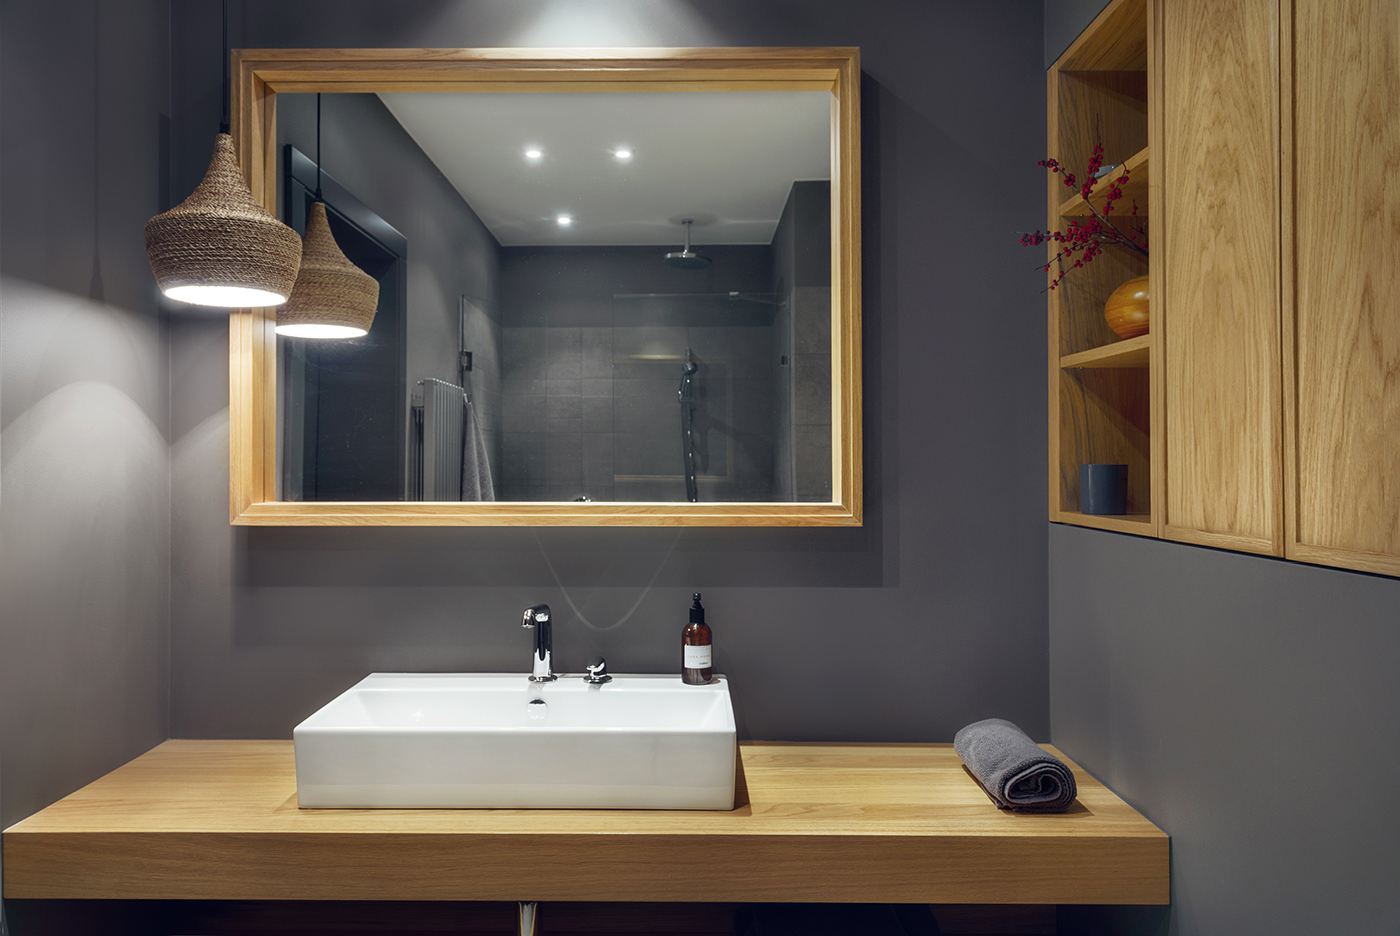 apartment bedroom bathroom kitchen interiordesign apartmentdesign Interior interiorarchitecture architecture